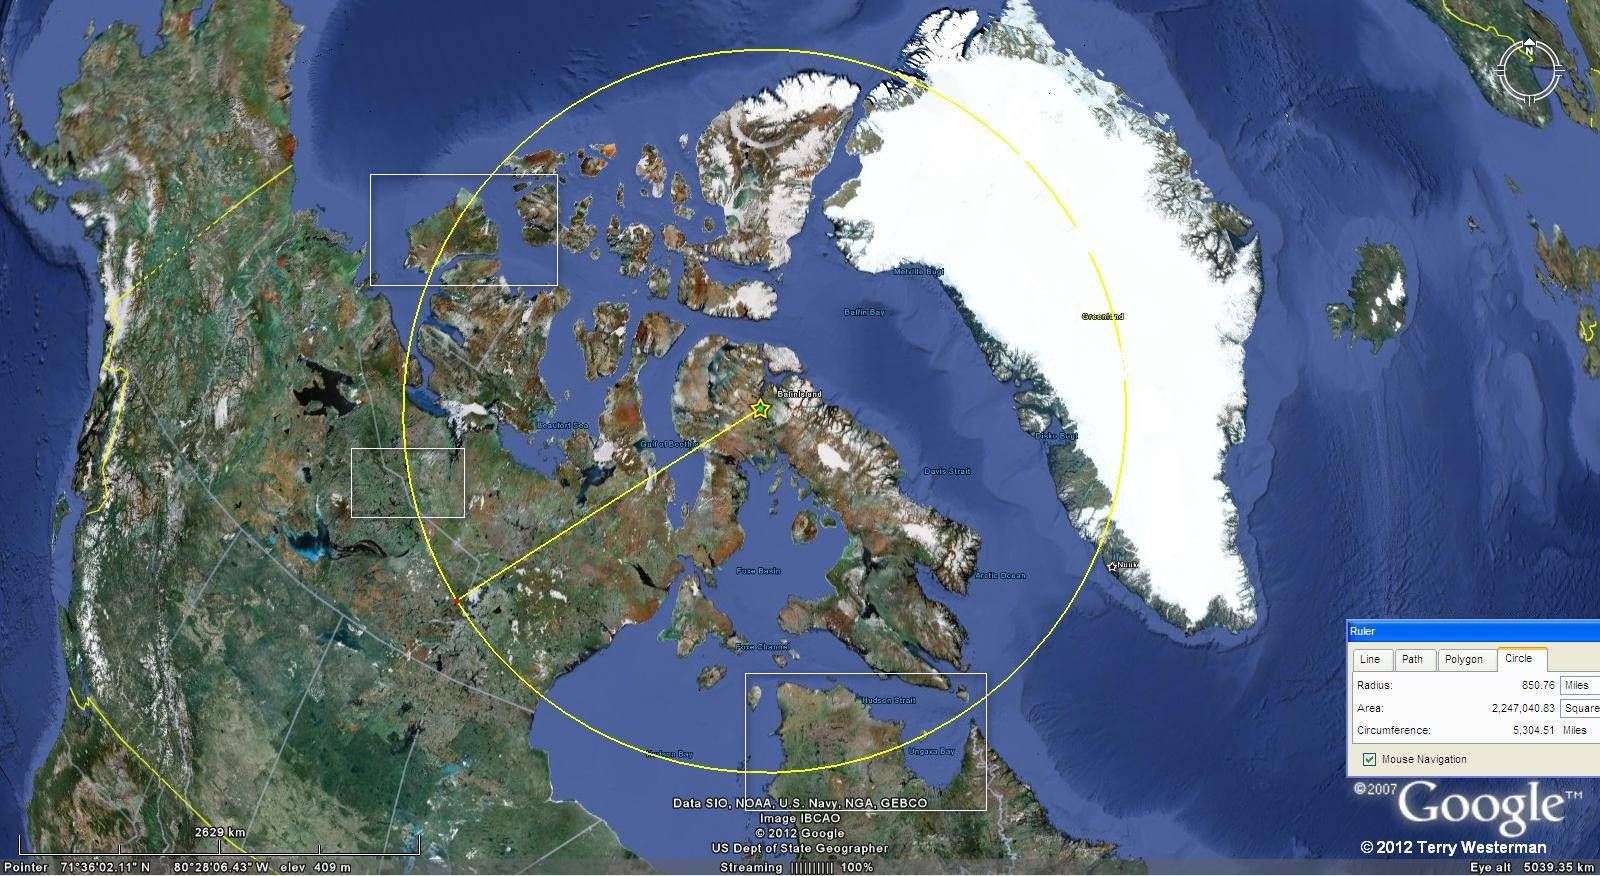 The Baffin Island 850 mile radius seismic circle